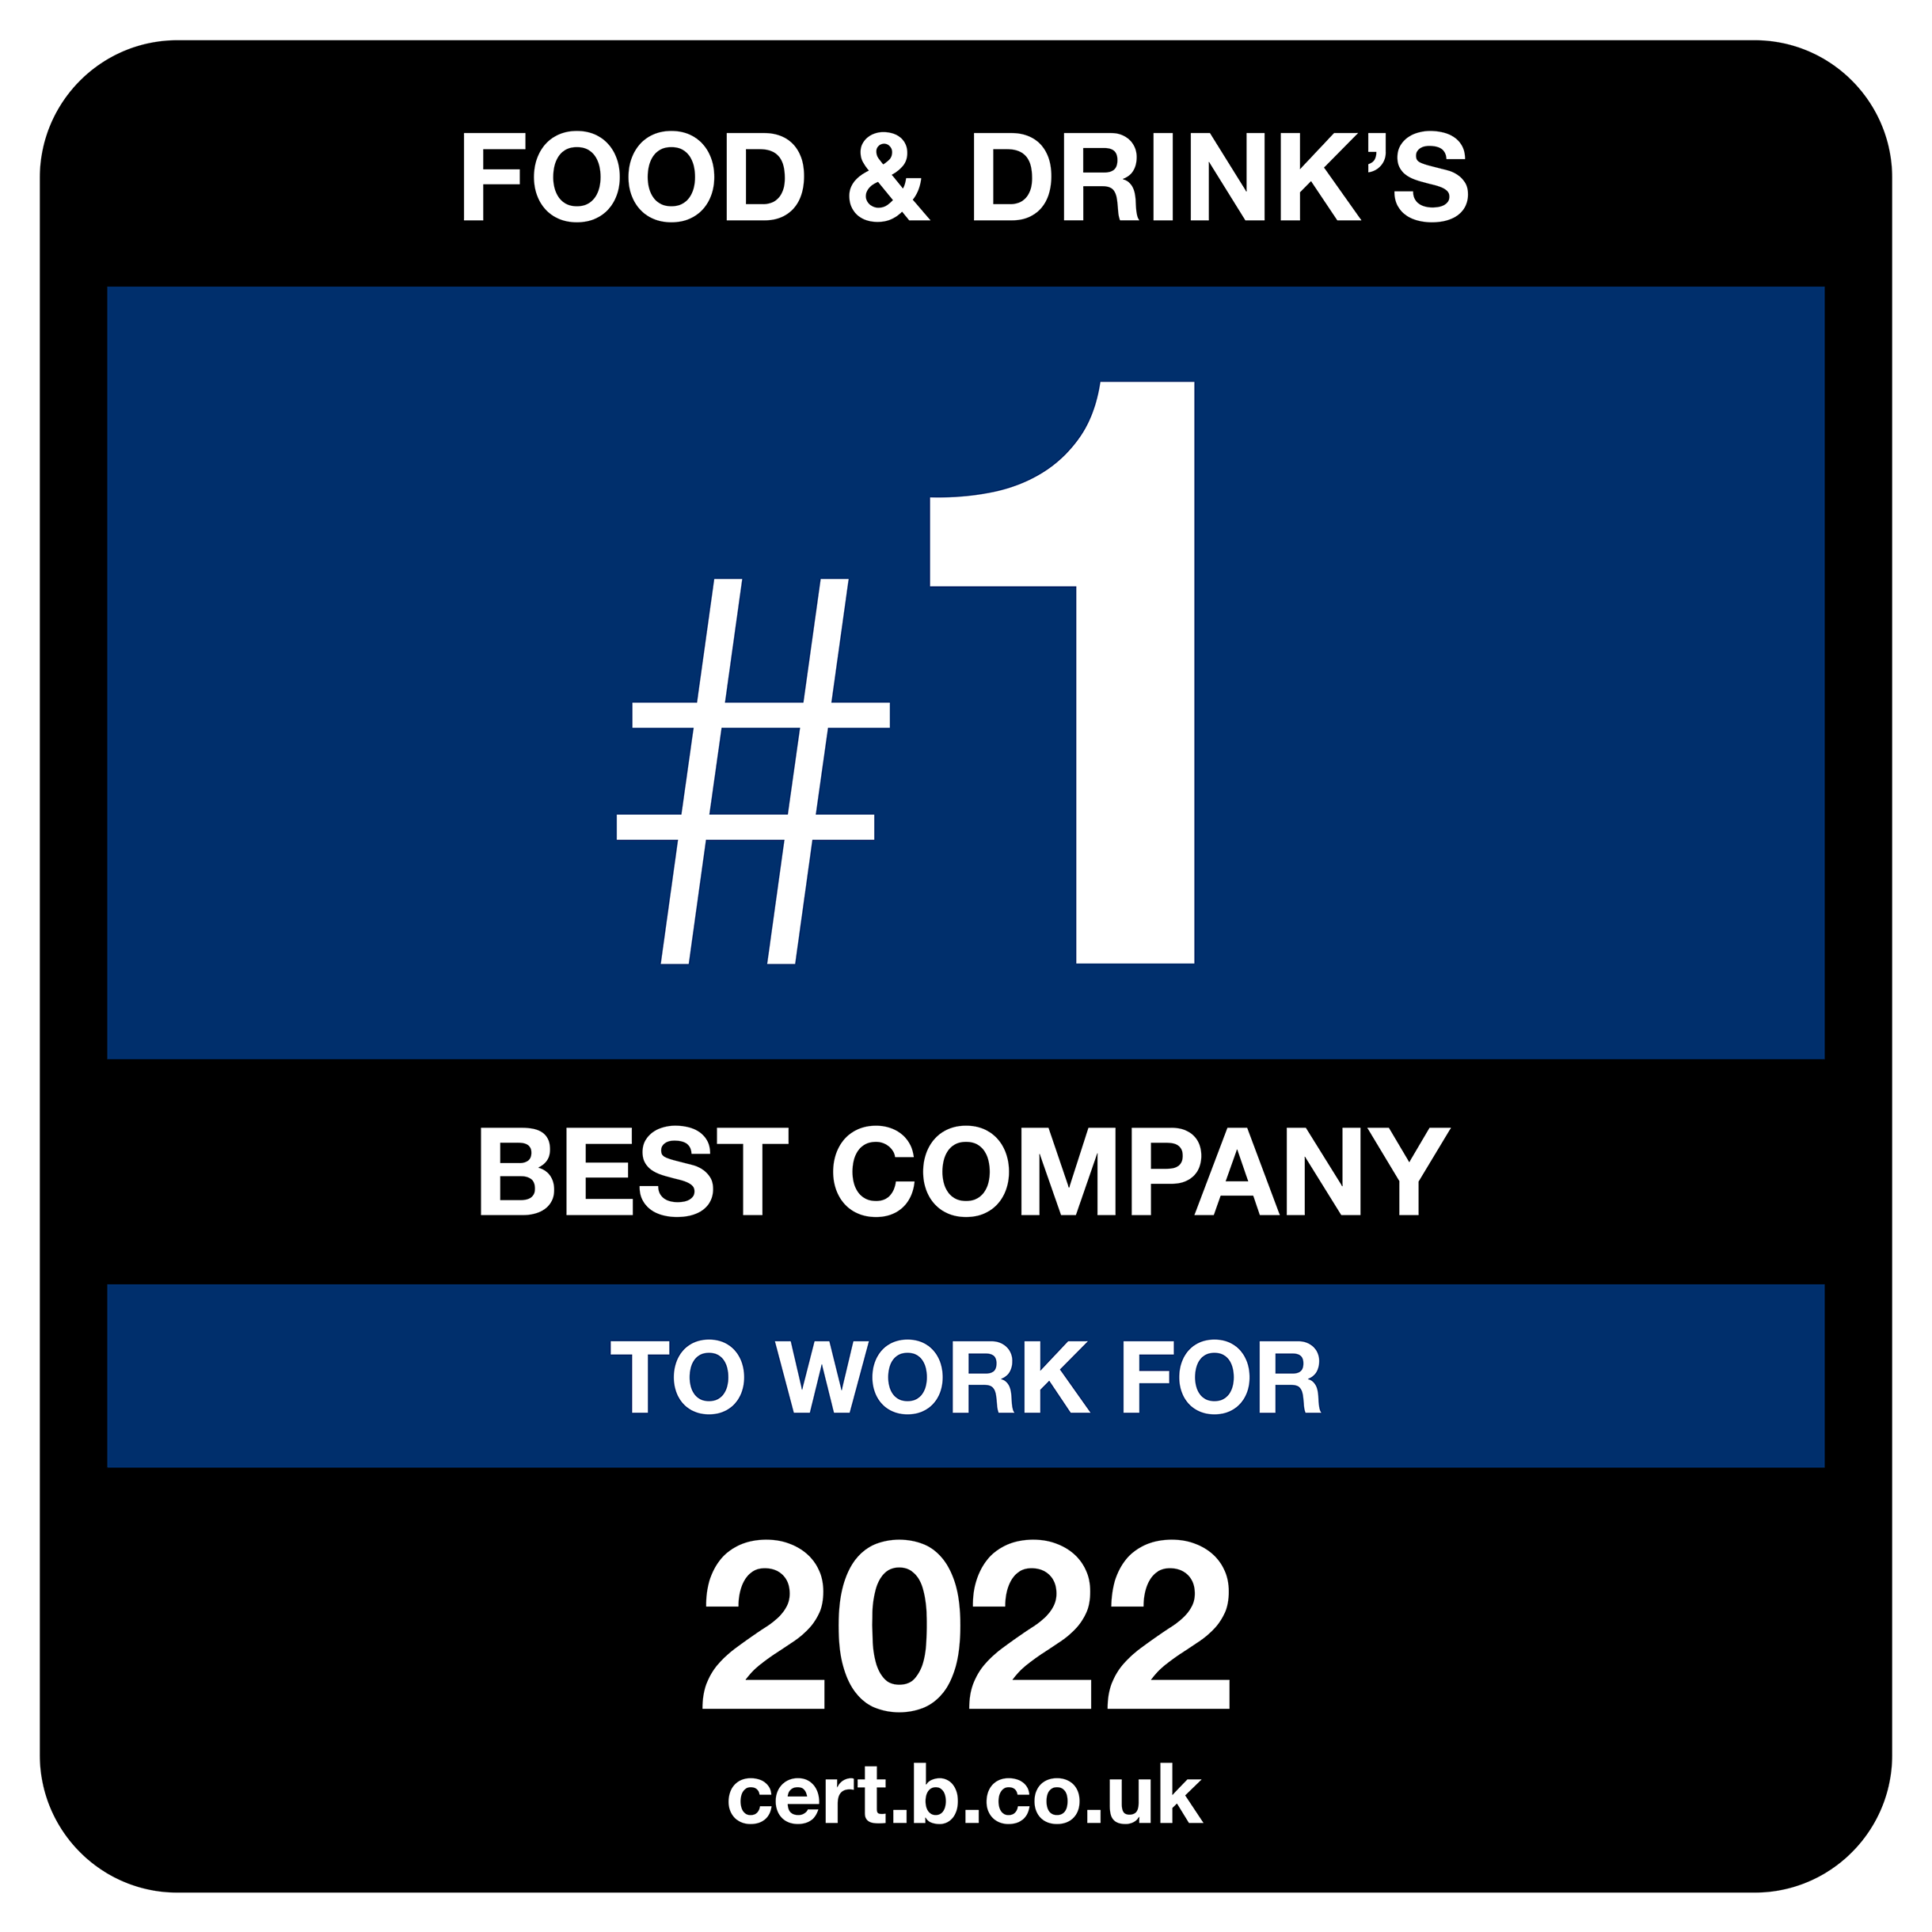 RH Amar named Best Food & Drink Company 2022